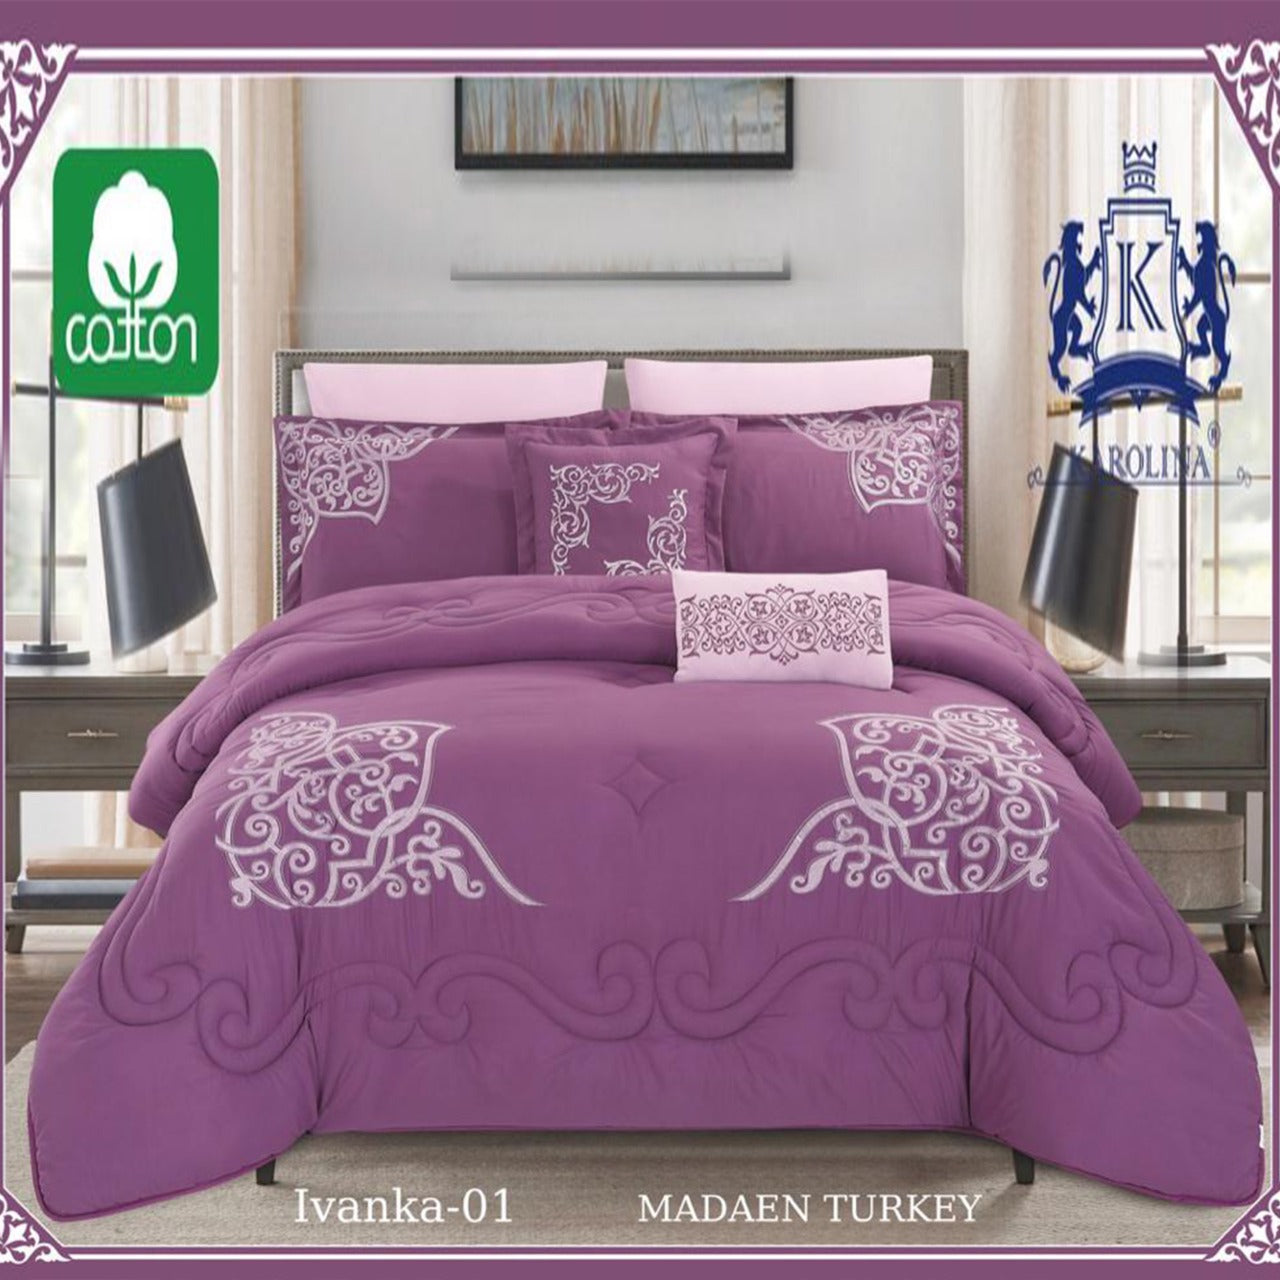 Turkey Ivanka - 01 Karolina 10 Piece Comforter Bedding with sheet and Decorative Pillow Shams | Made in Turkey Ivanka - 01